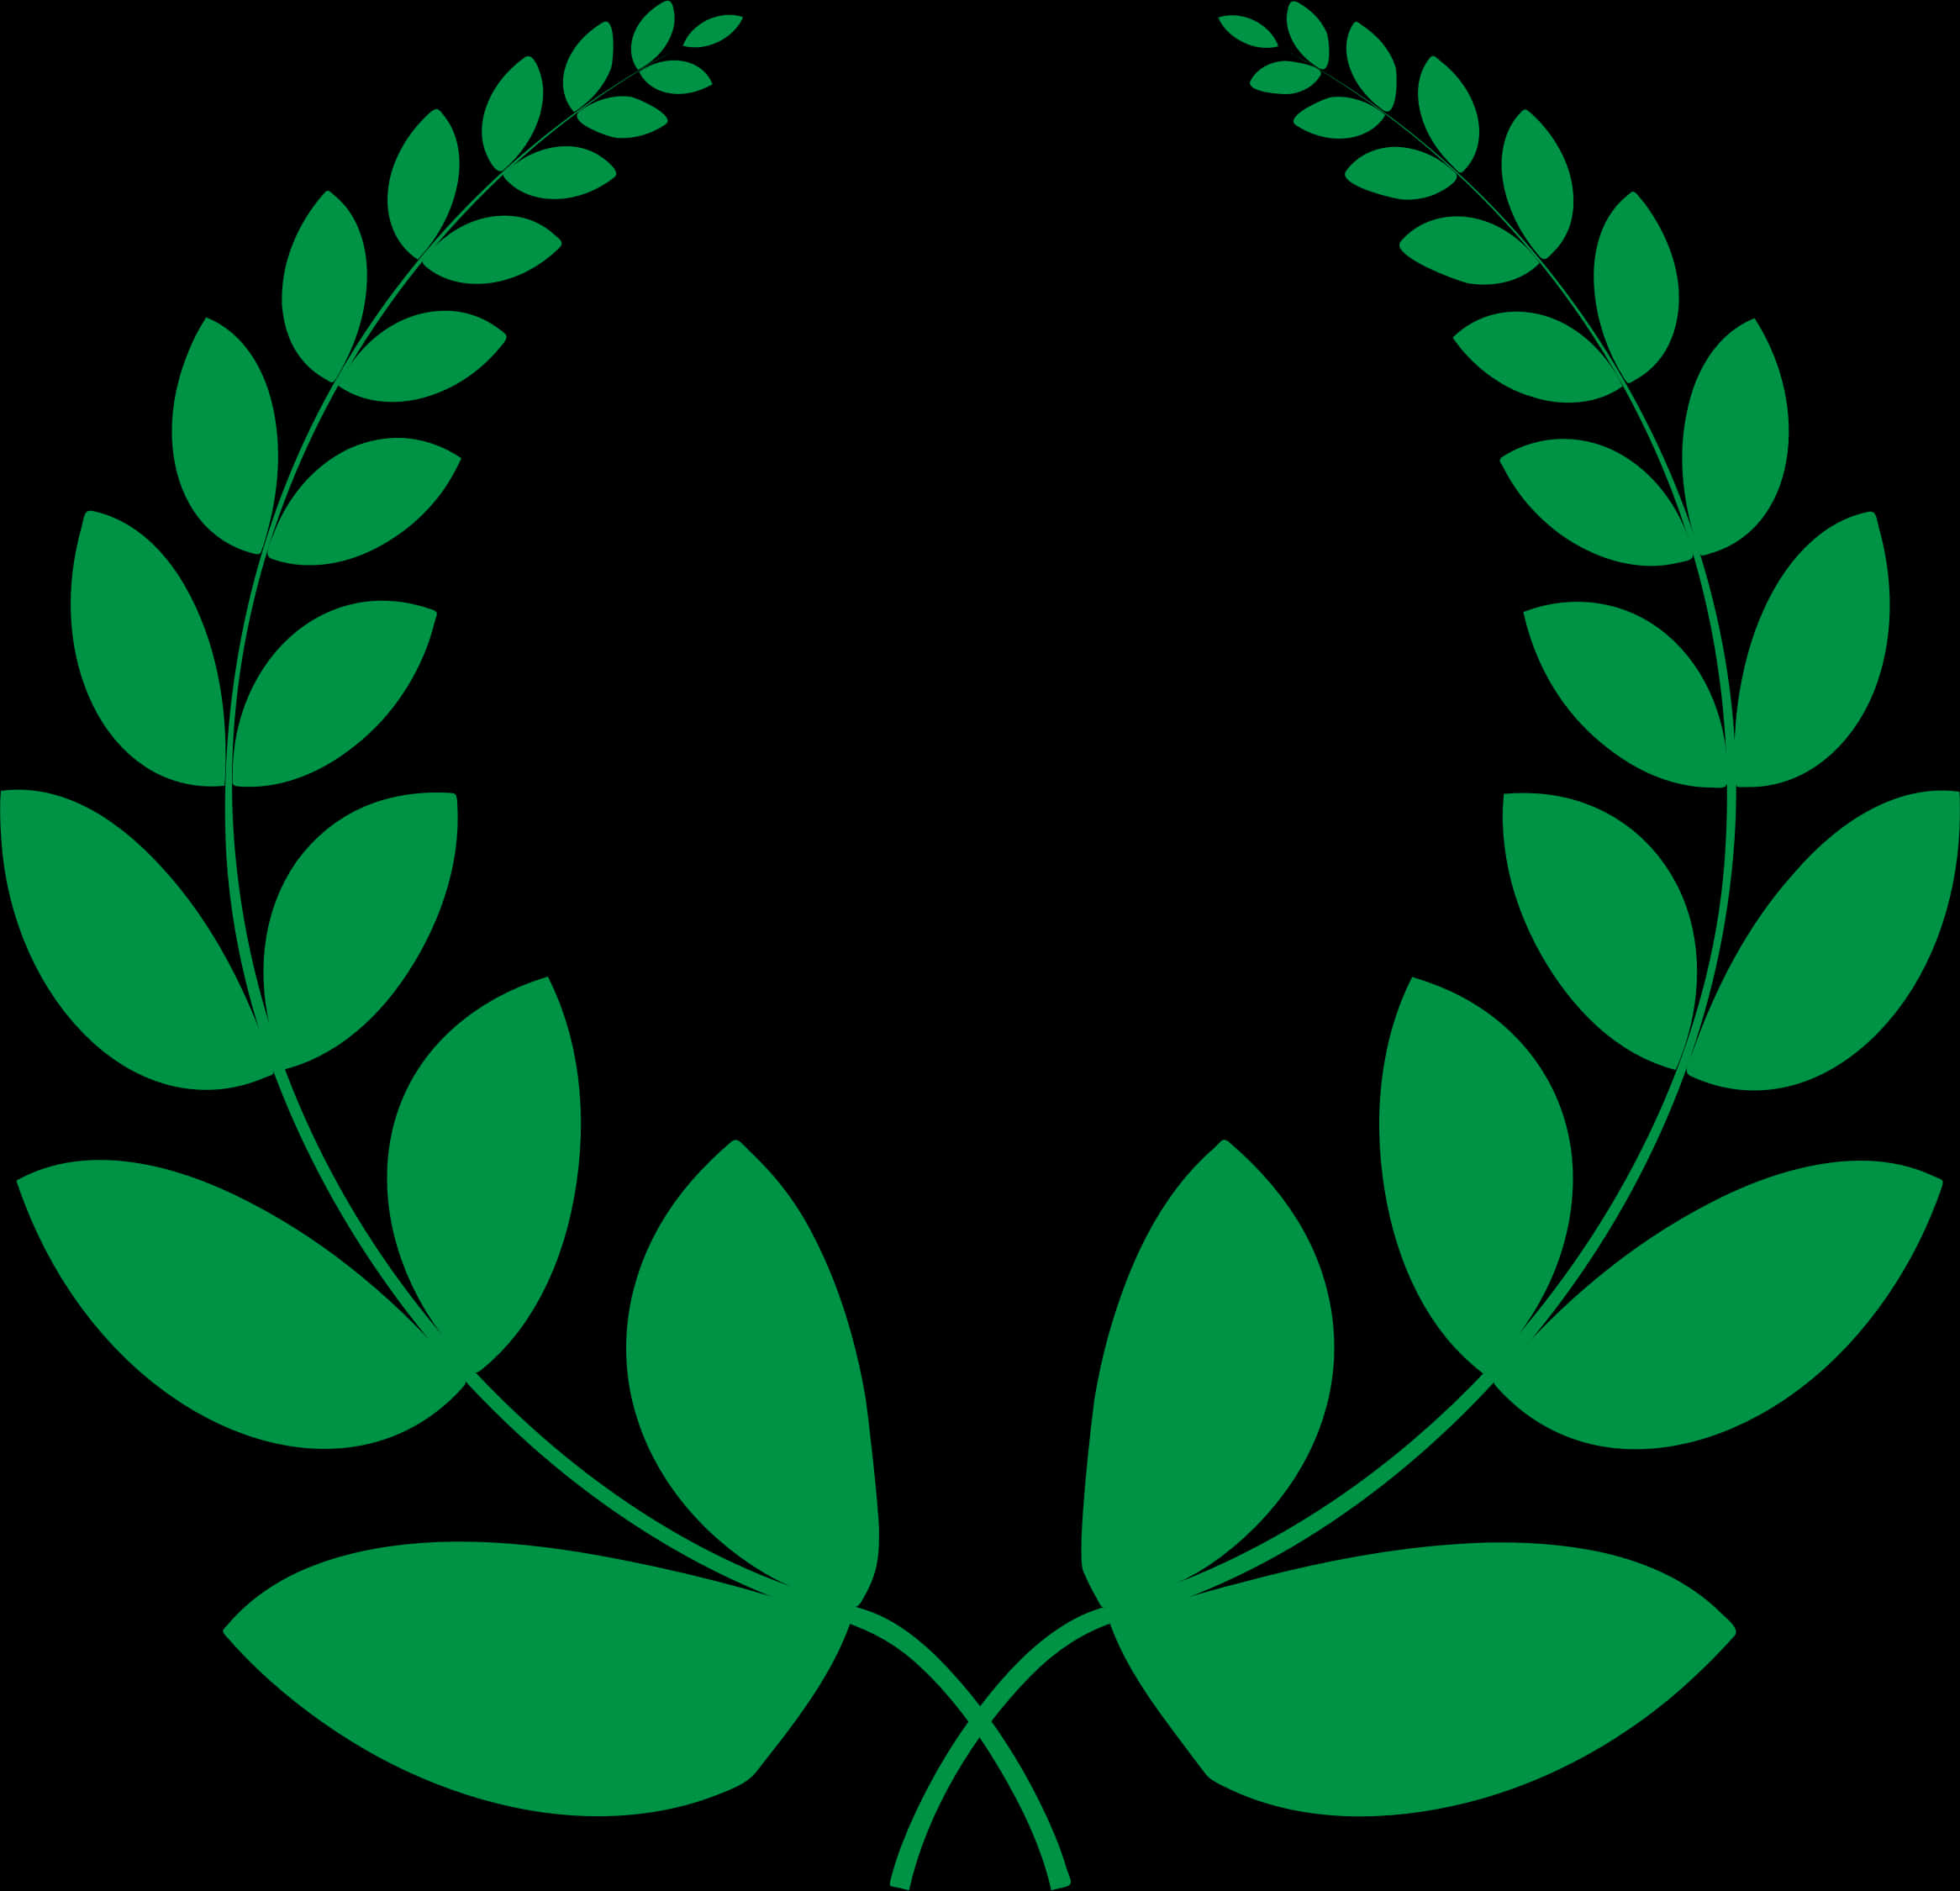 Green Leaf Wreath Vector PNG image